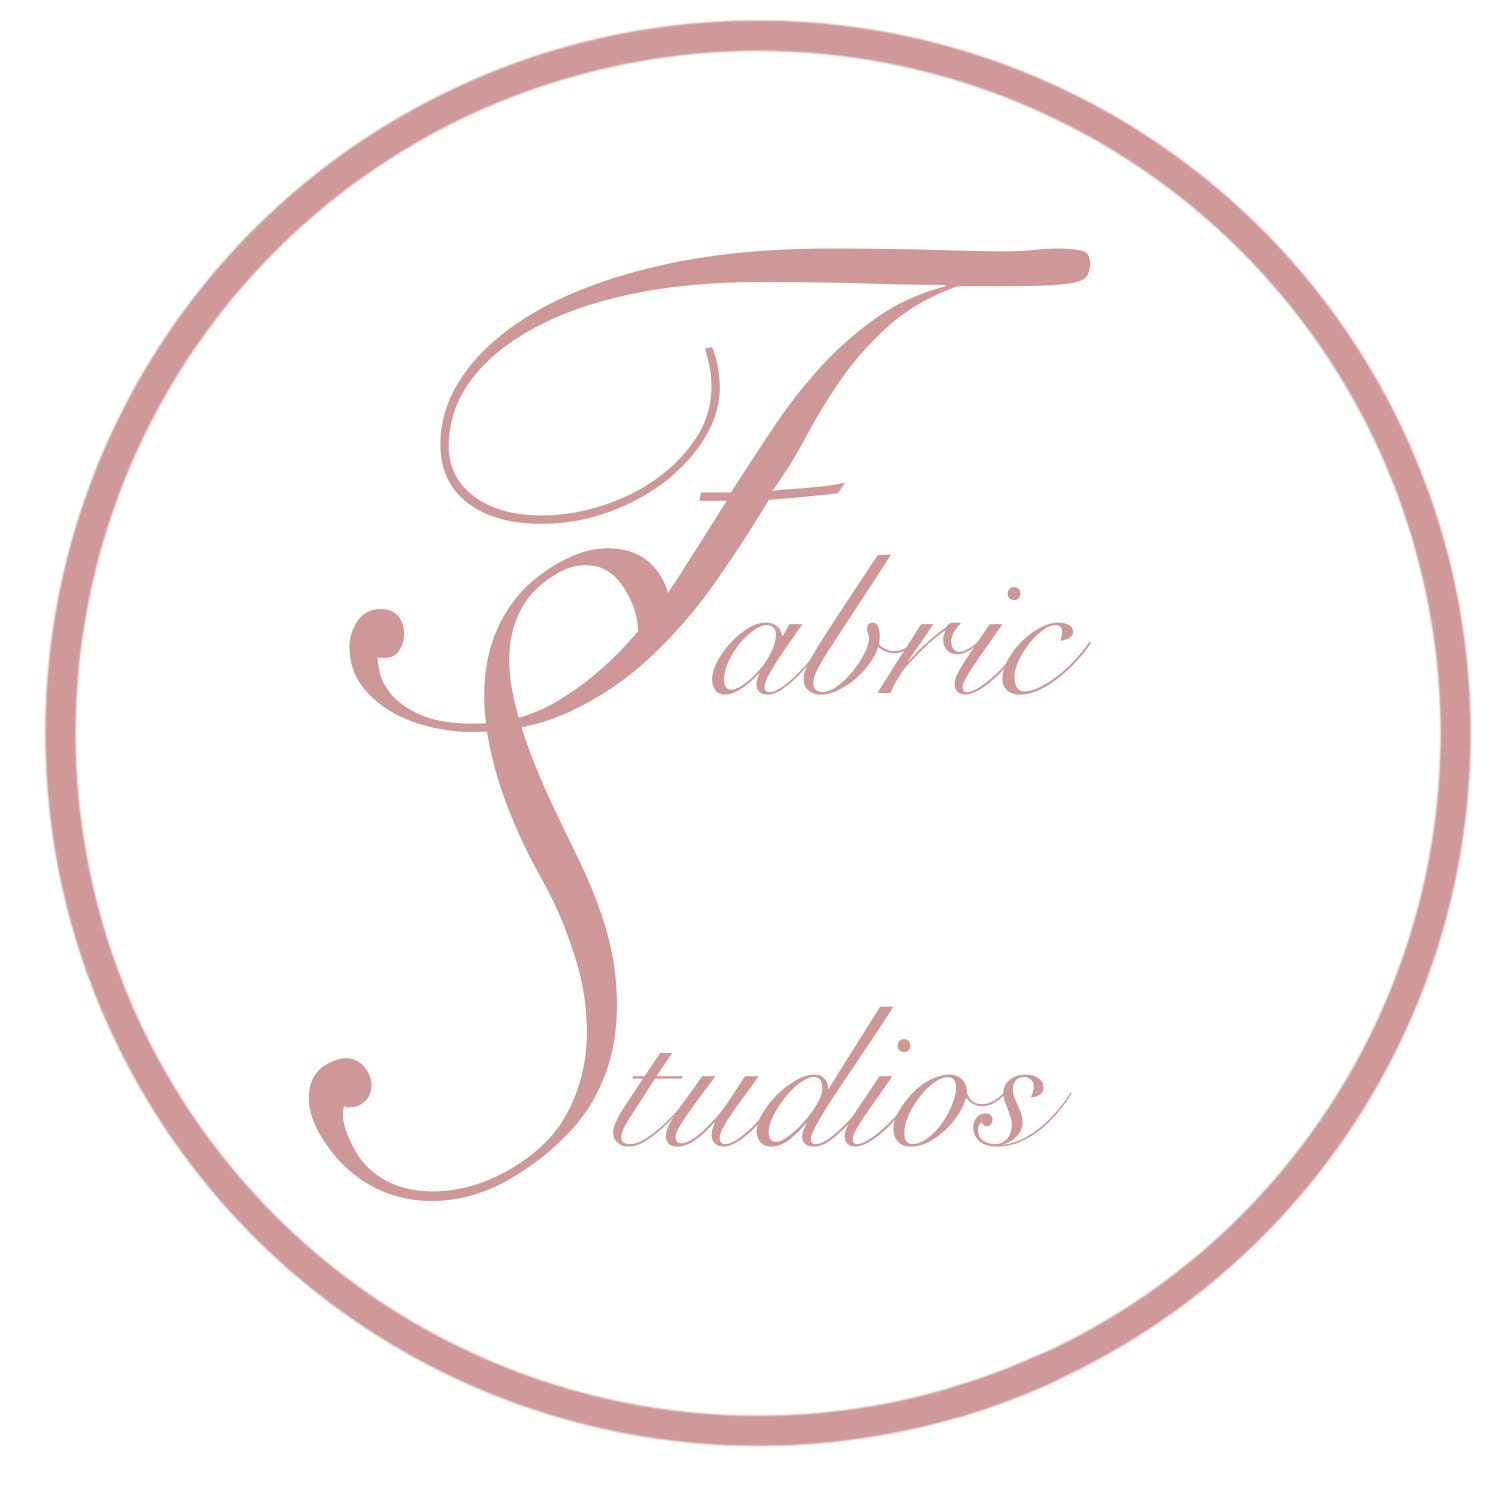 Fabric Studios by FabricStudios on Etsy